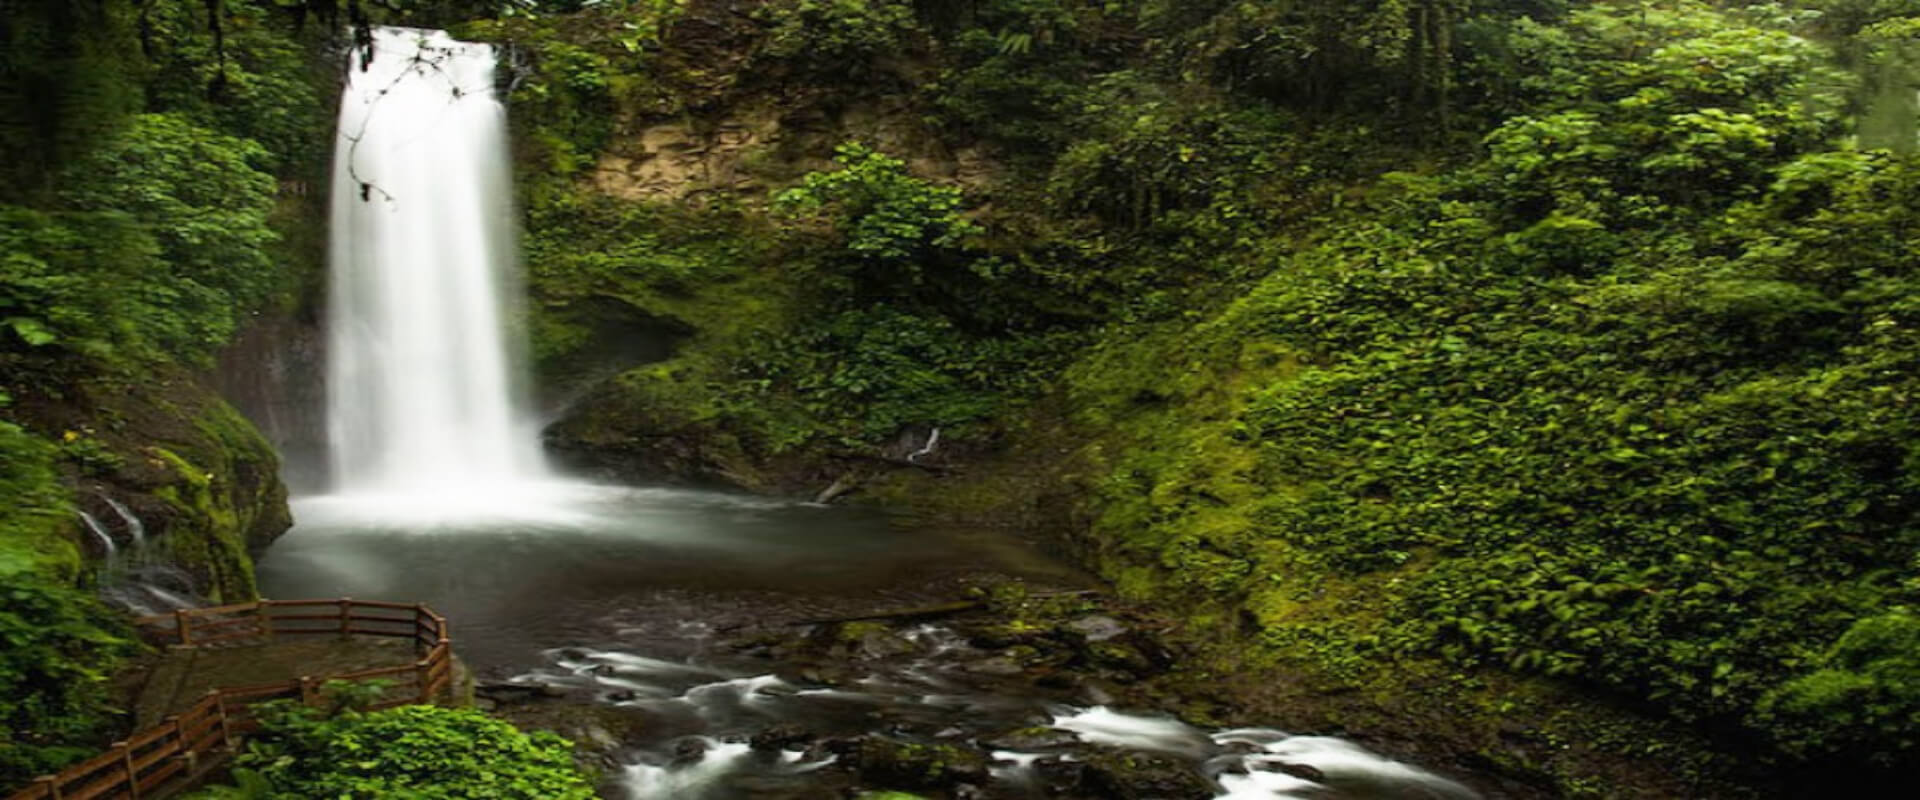 La Paz Waterfall Gardens Tour  | Costa Rica Jade Tours